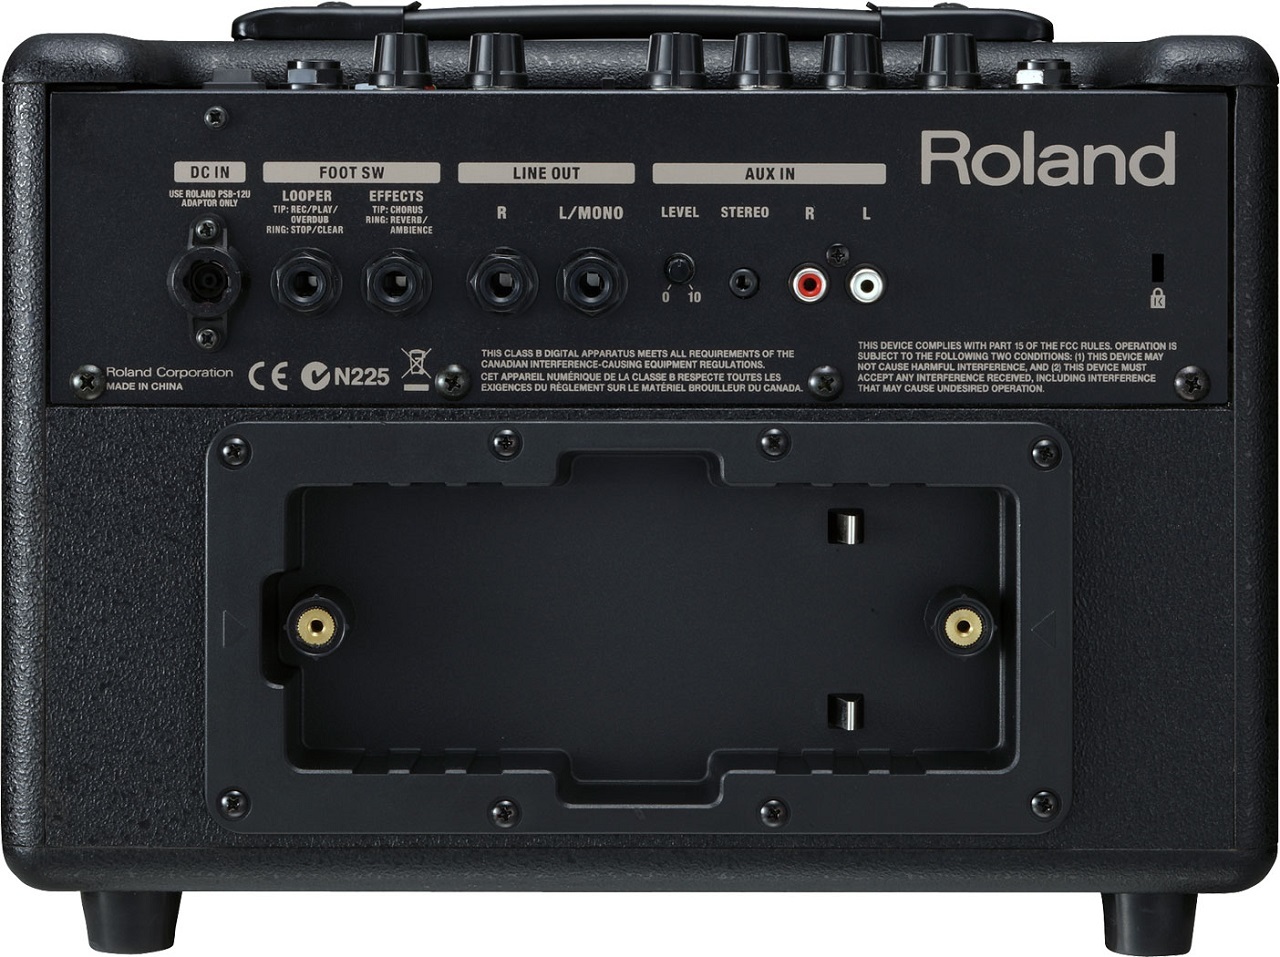 Roland AC-33 アコースティック専用アンプ 電池駆動可能 ローランド 